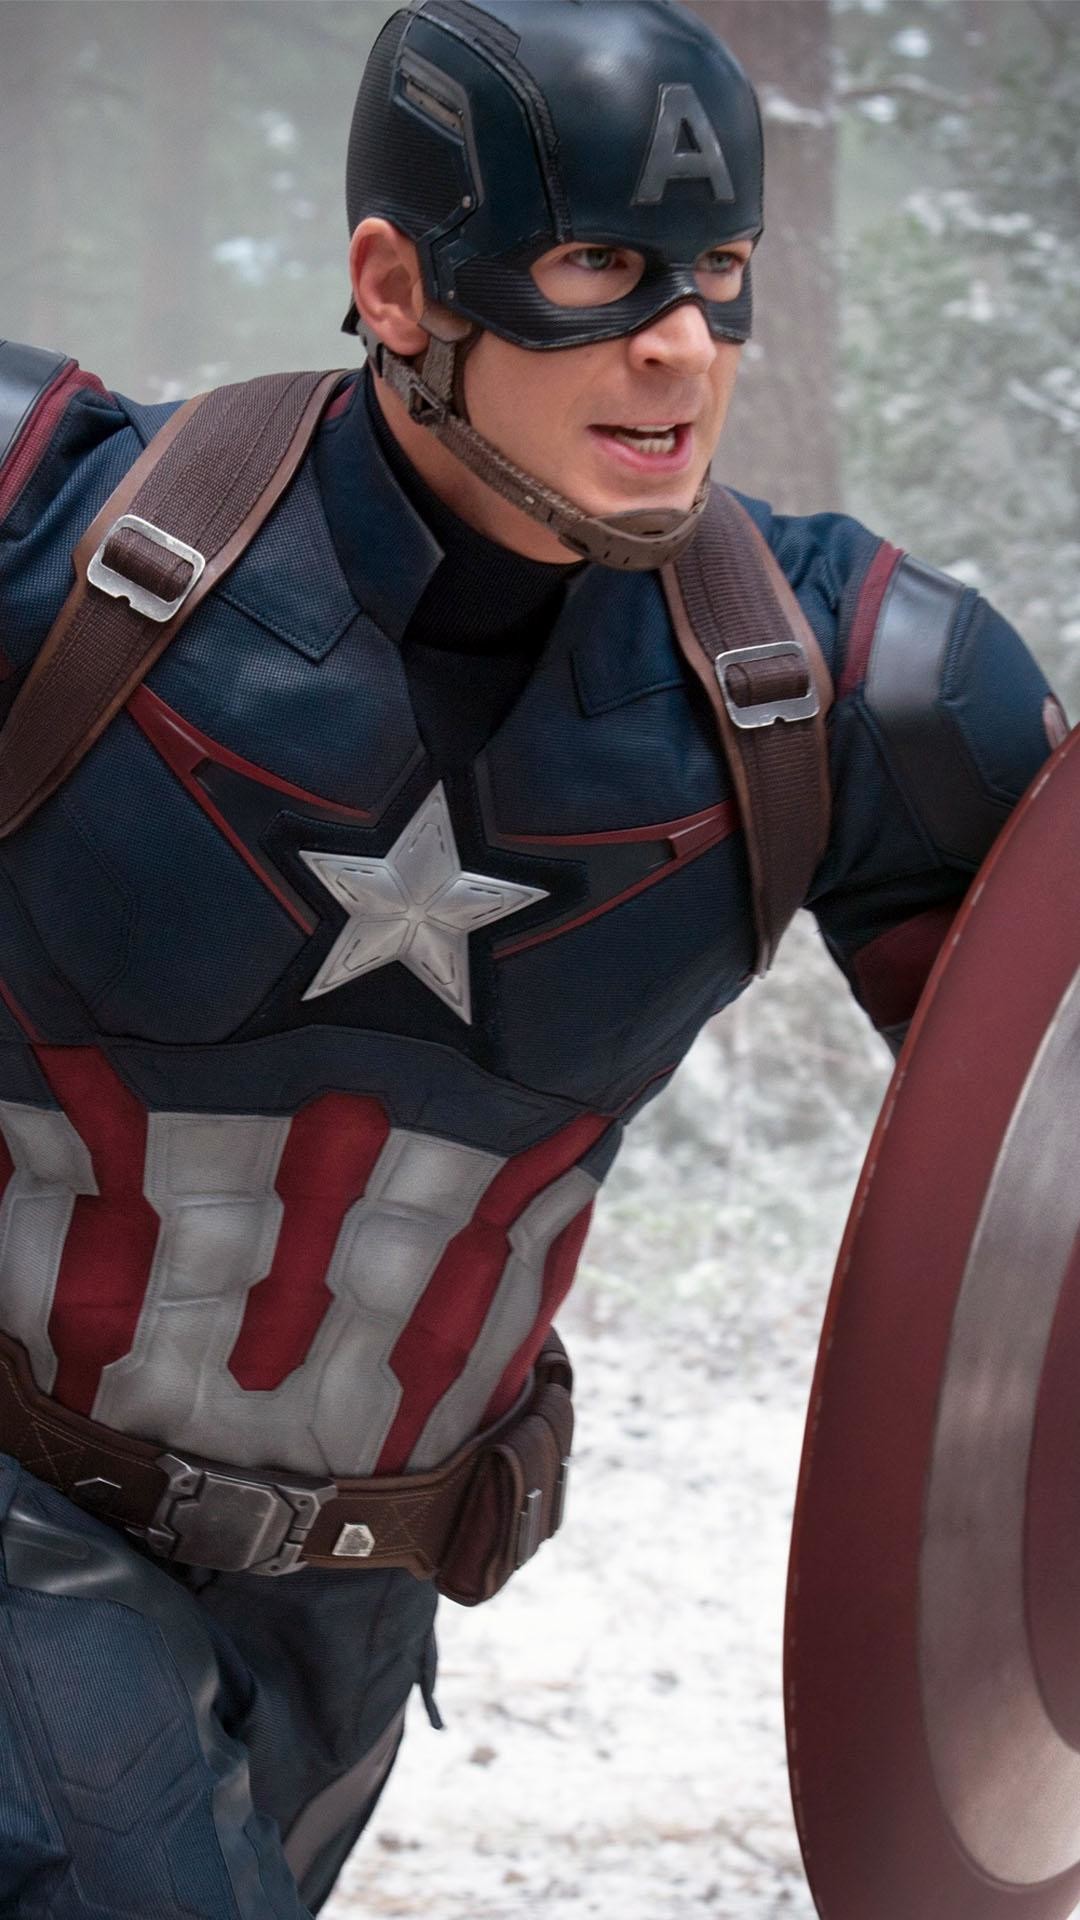 1080x1920 wallpaper.wiki-Captain-America-Avengers-Images-PIC-WPD0011126